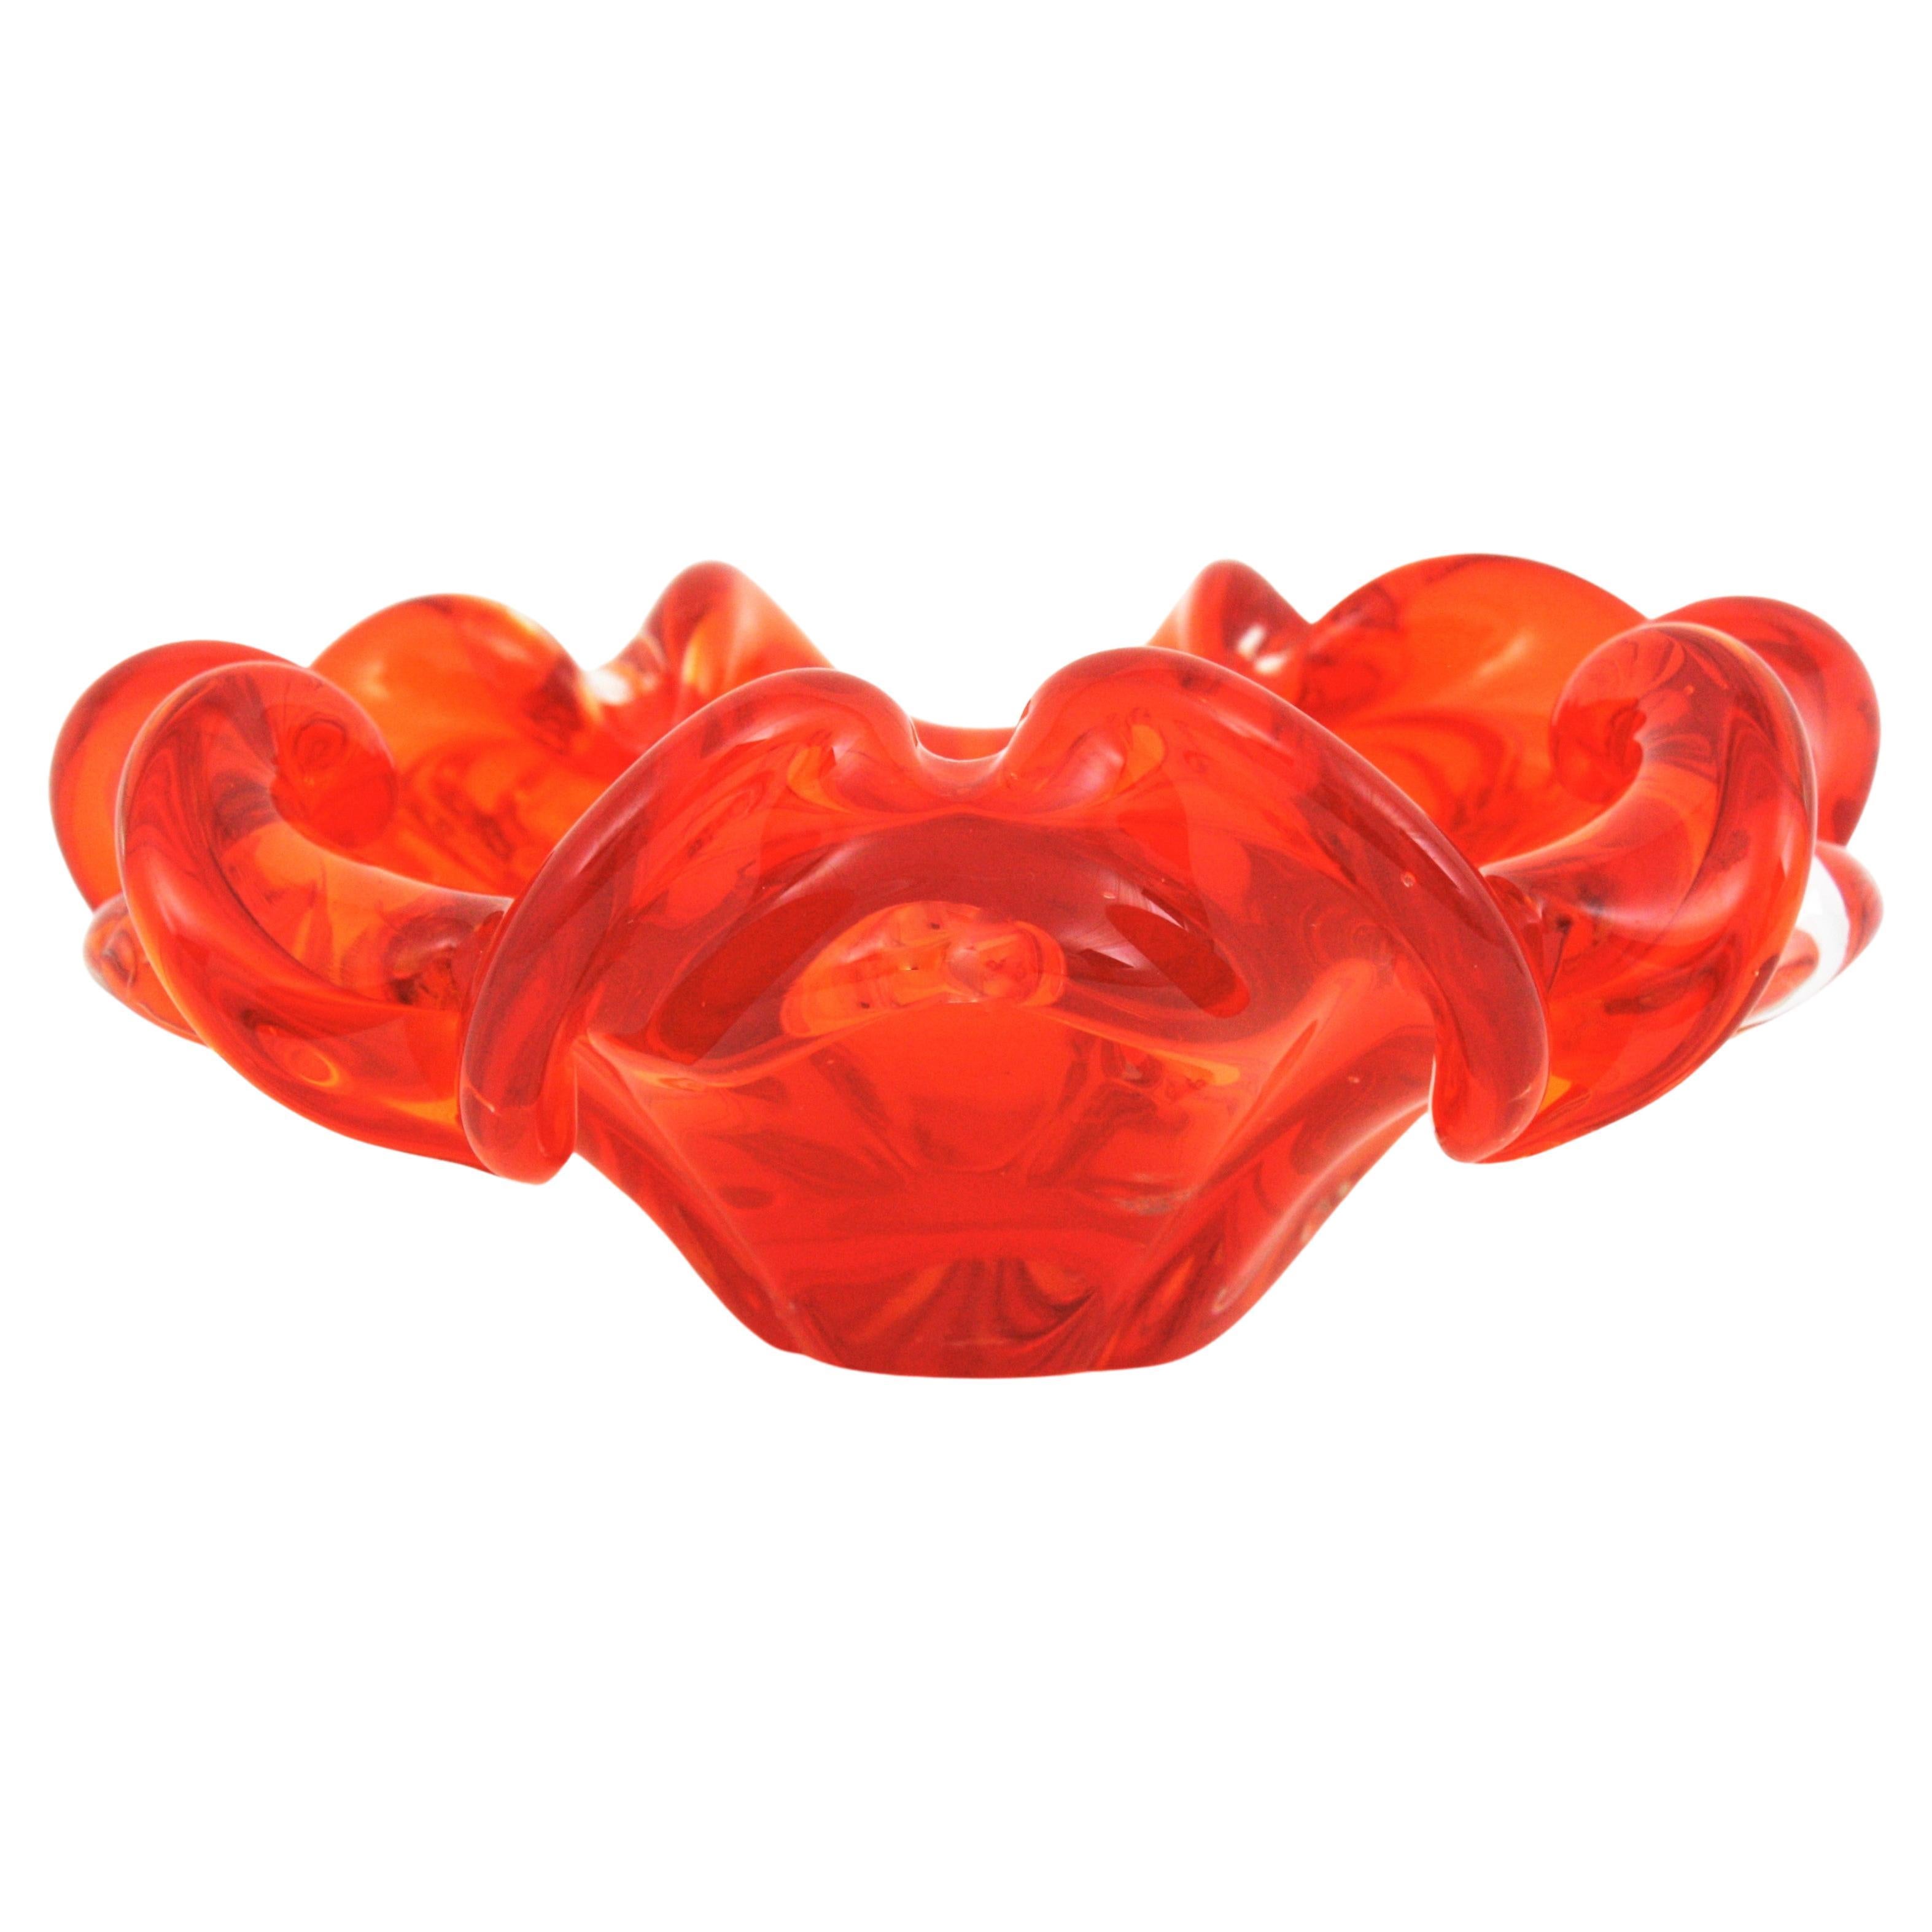 Murano Handblown Orange Sommerso Italian Art Glass Flower Bowl